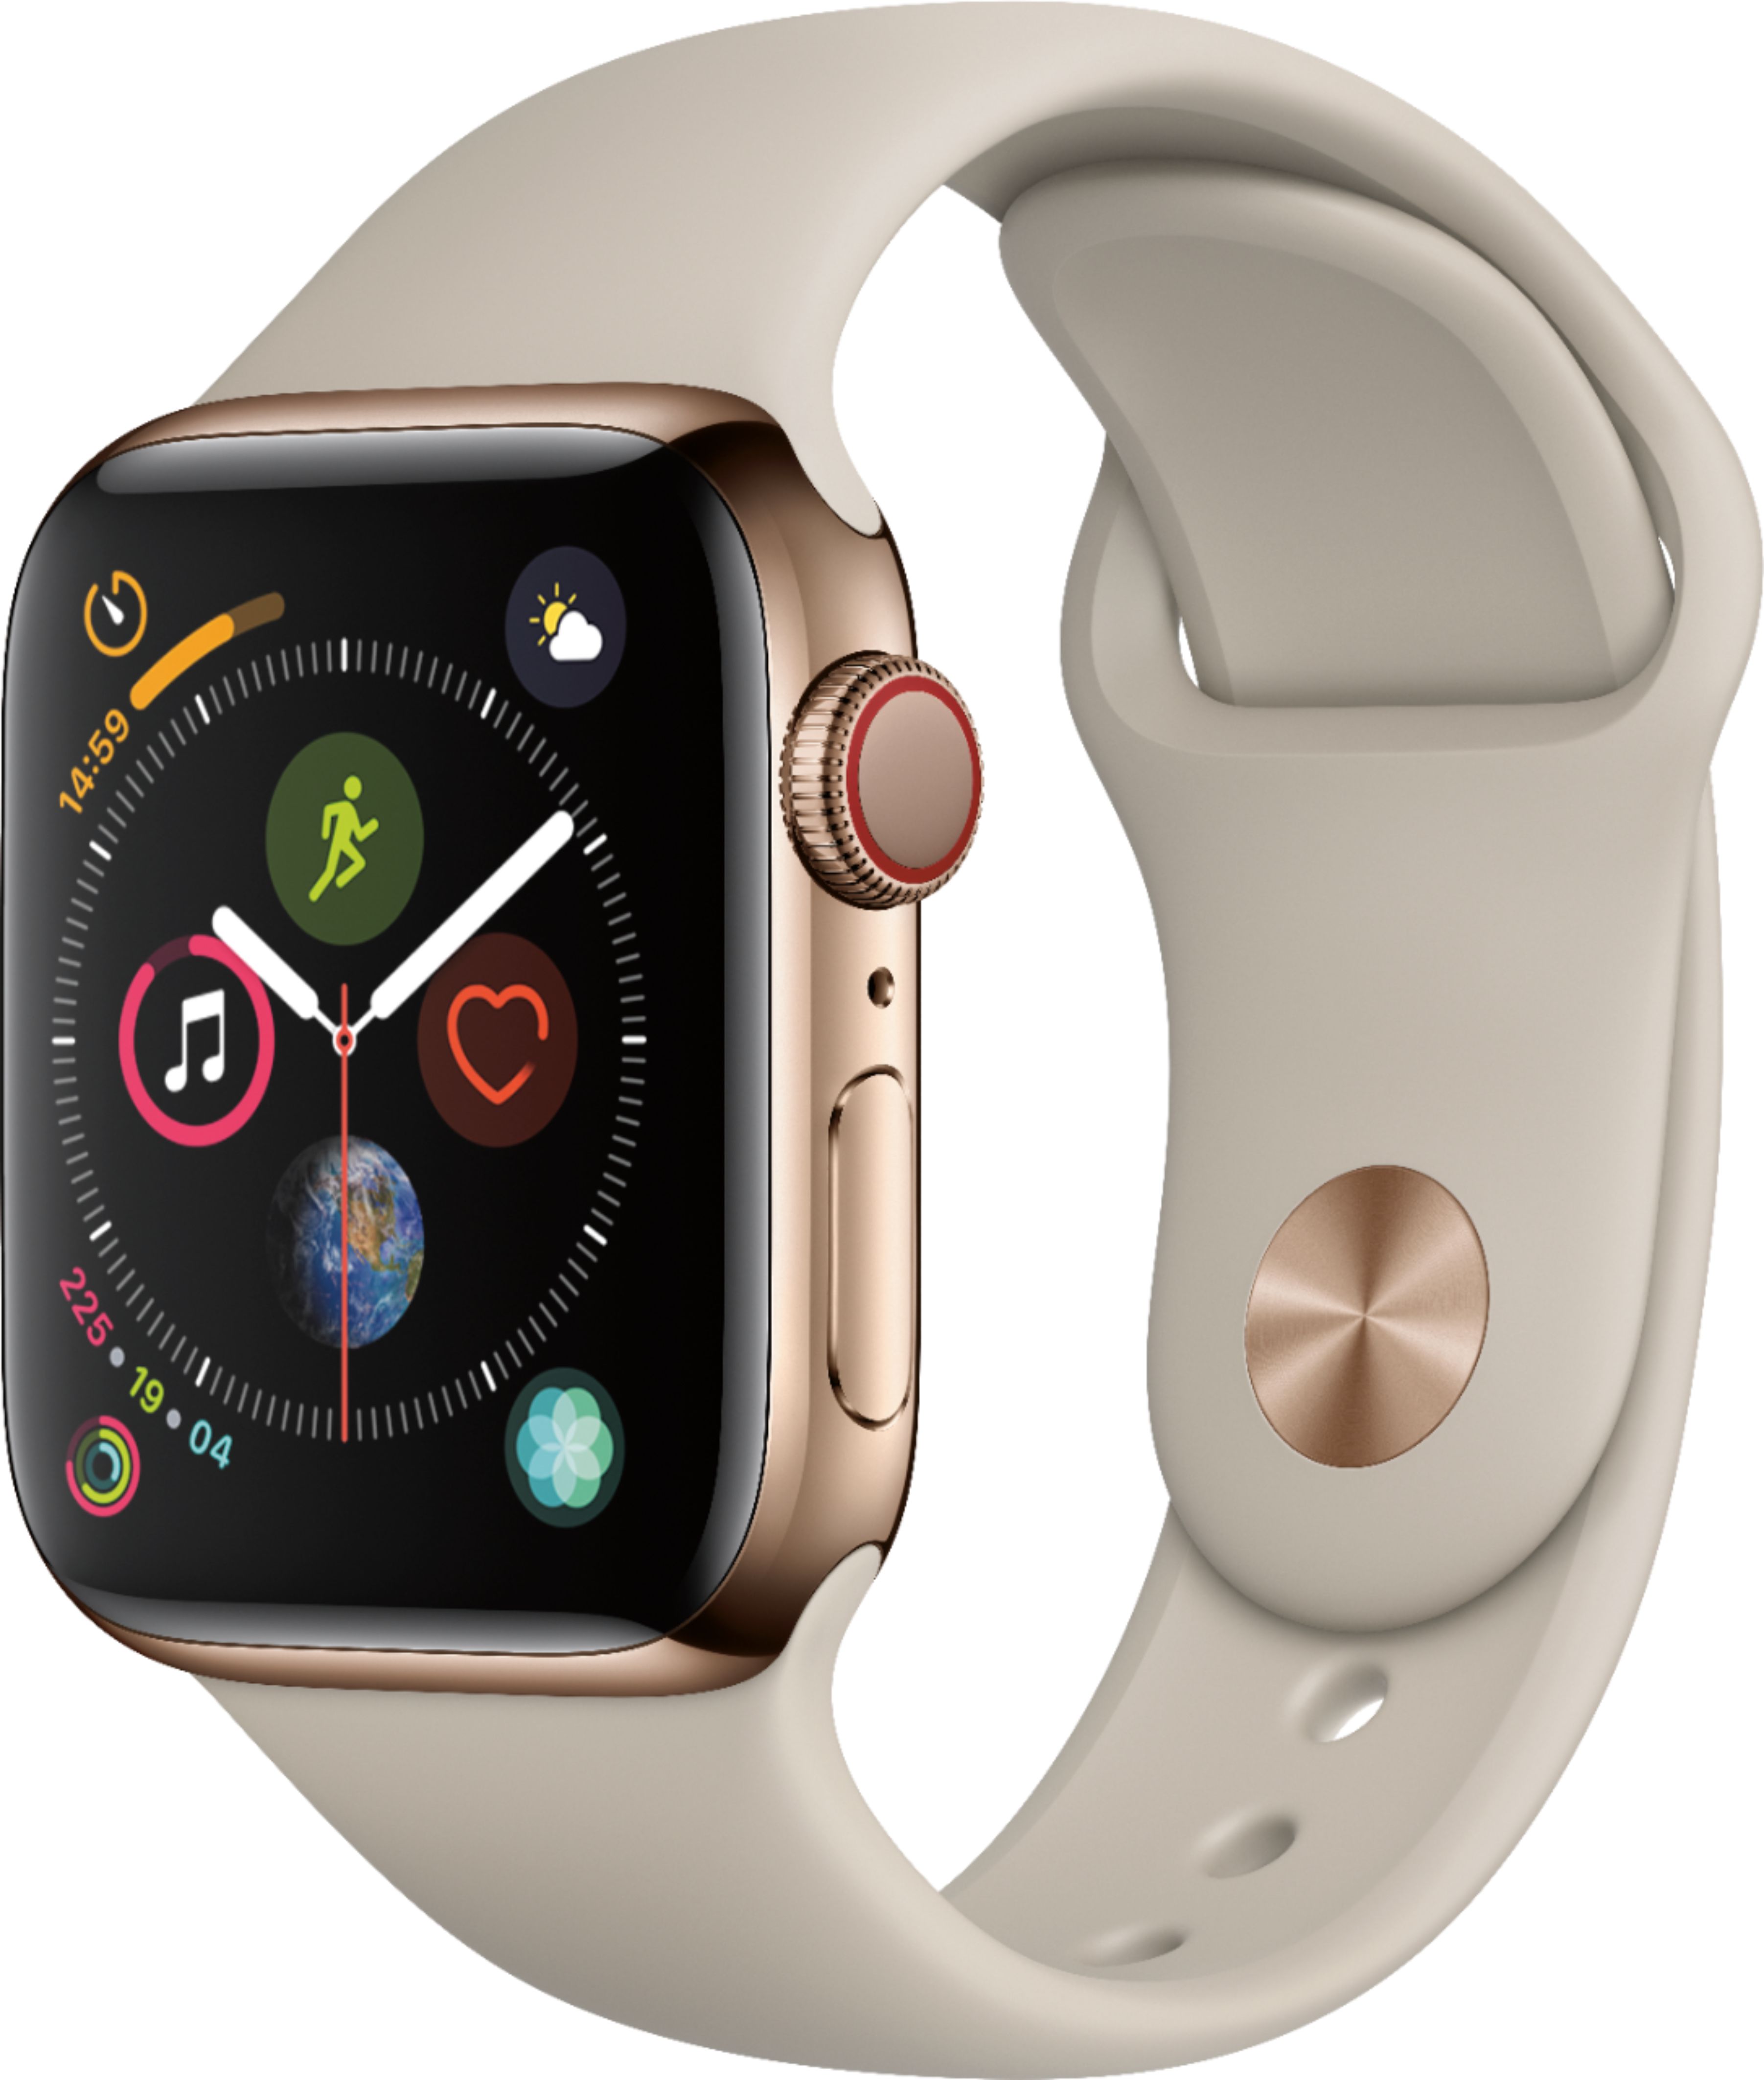 Apple Watch Series 4 (GPS + Cellular) 40mm Gold - Best Buy